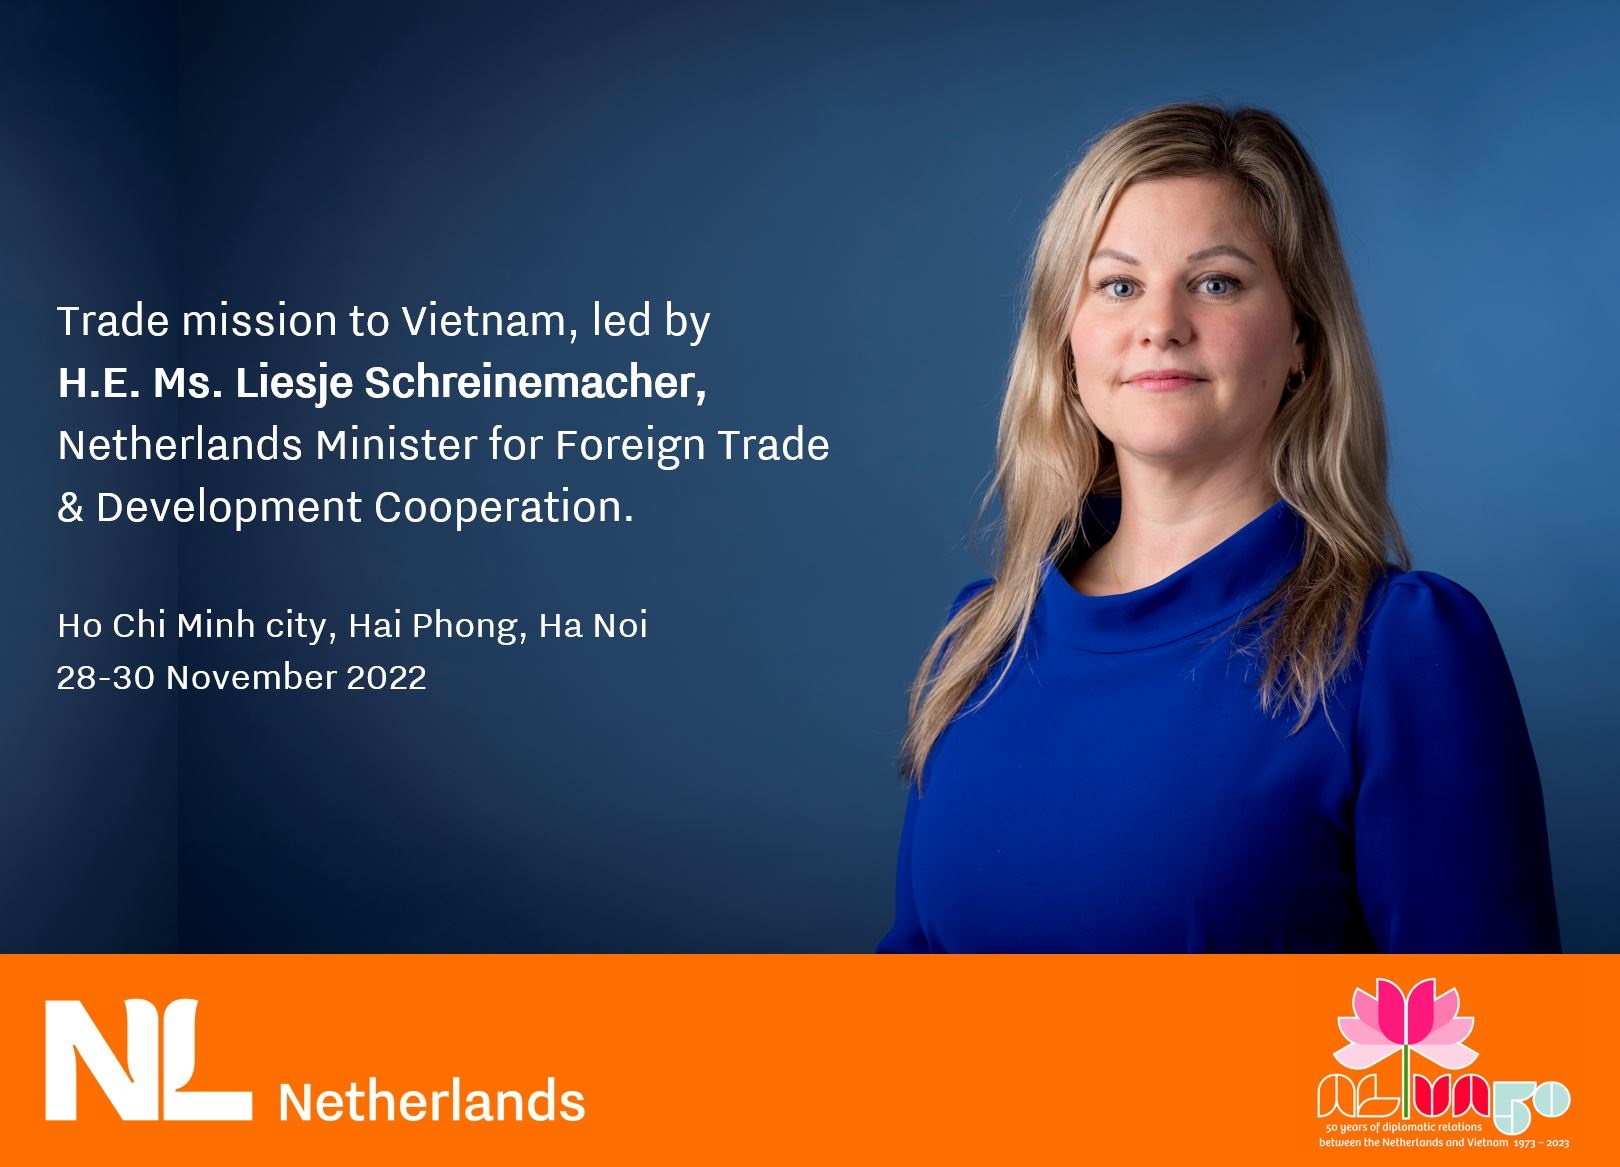 Ms. Lisje Schreinemacher, Netherlands Minister for Foreign Trade & Development